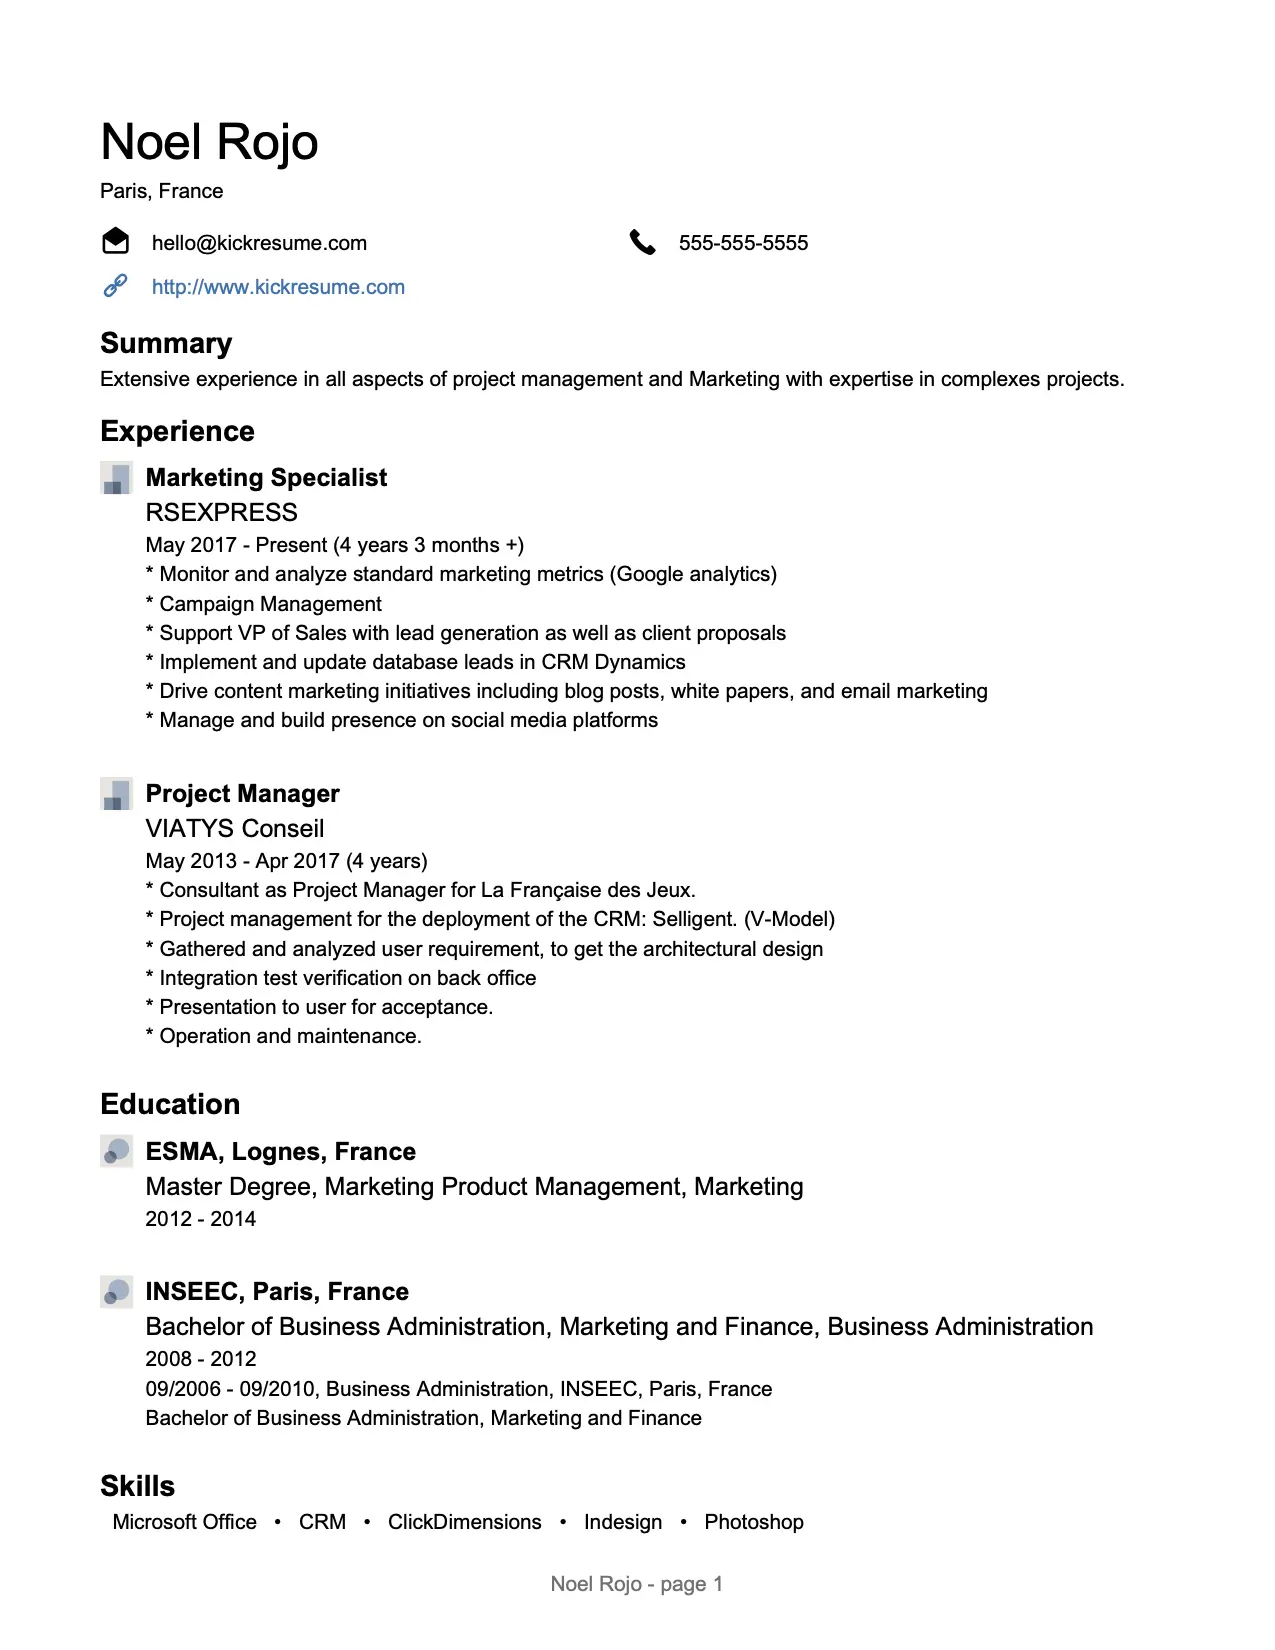 linkedin-resume-builder-download-a-resume-as-a-pdf